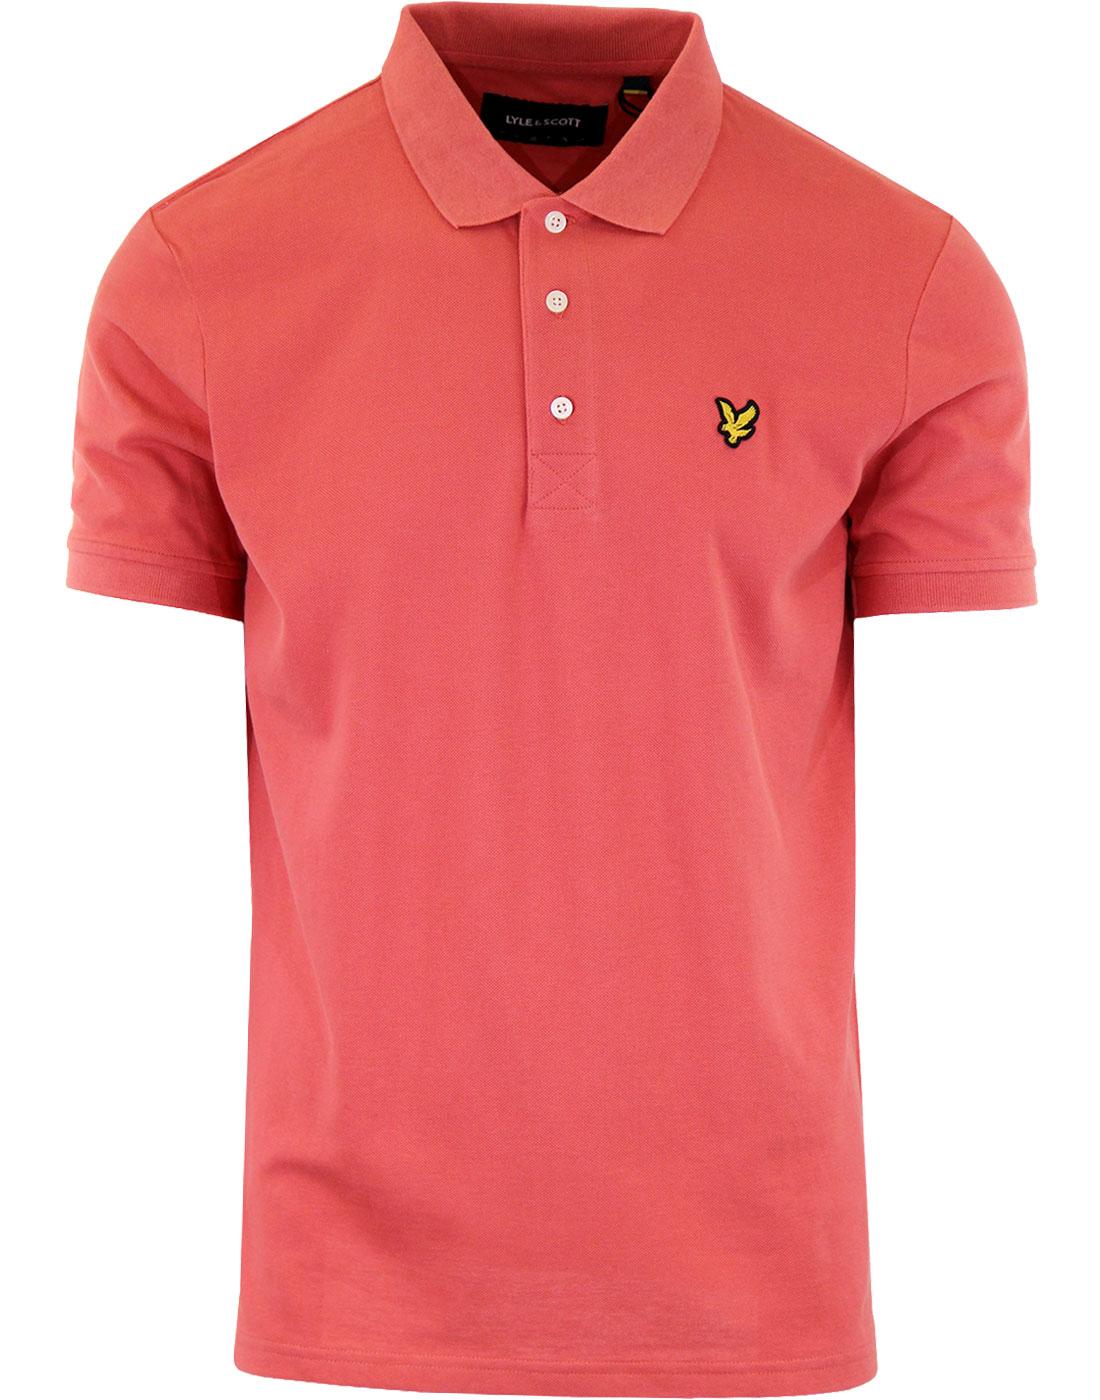 LYLE & SCOTT Men's Mod Pique Polo Shirt in Sunset Pink